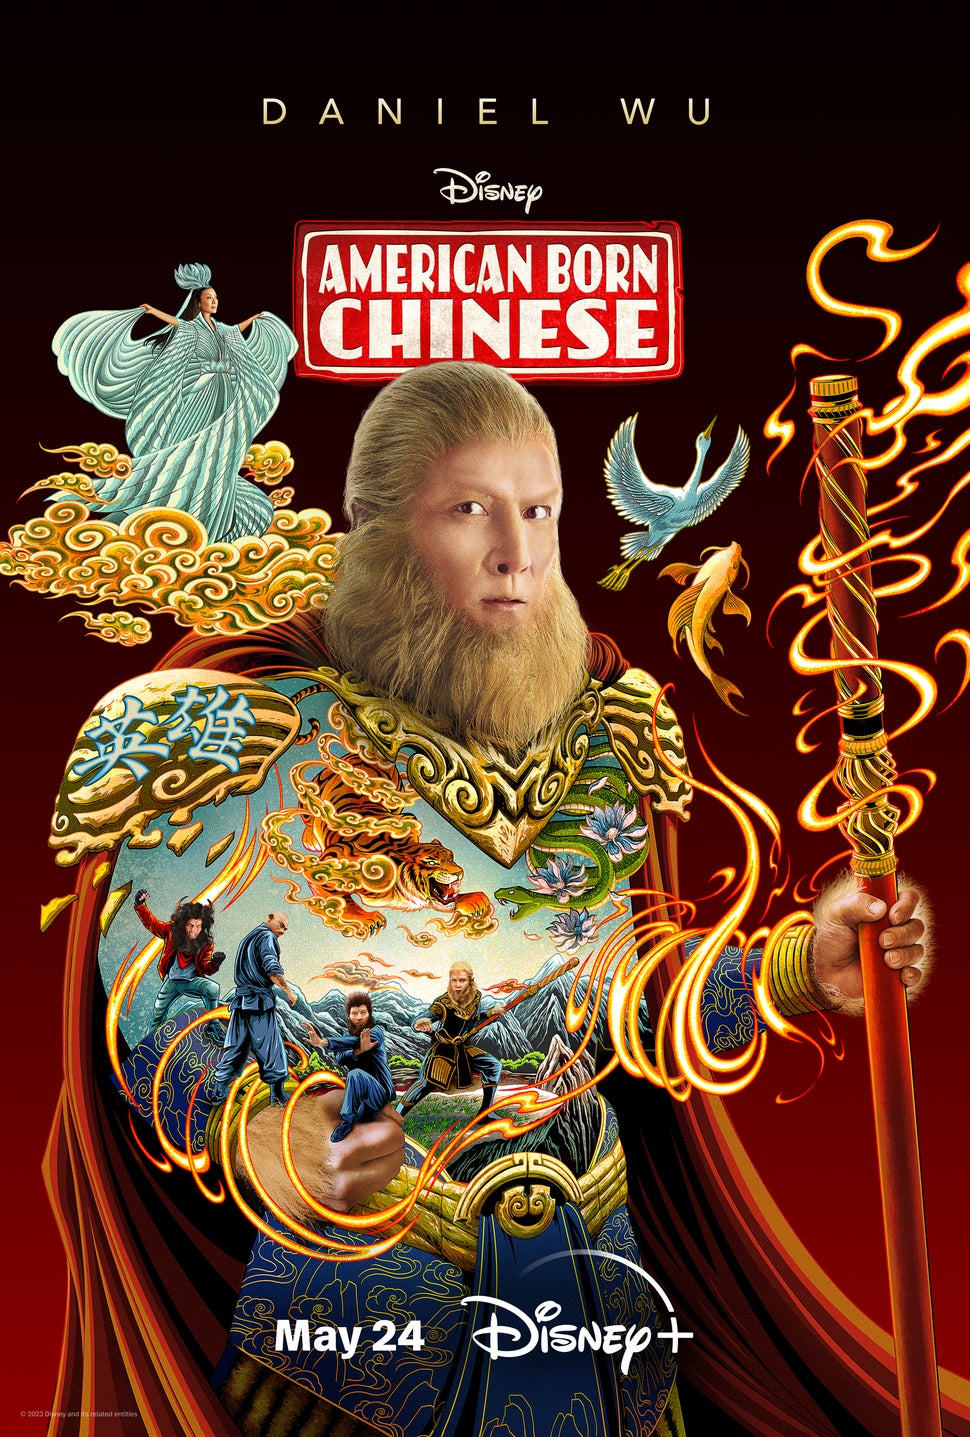 American Born Chinese Poster - Daniel Wu